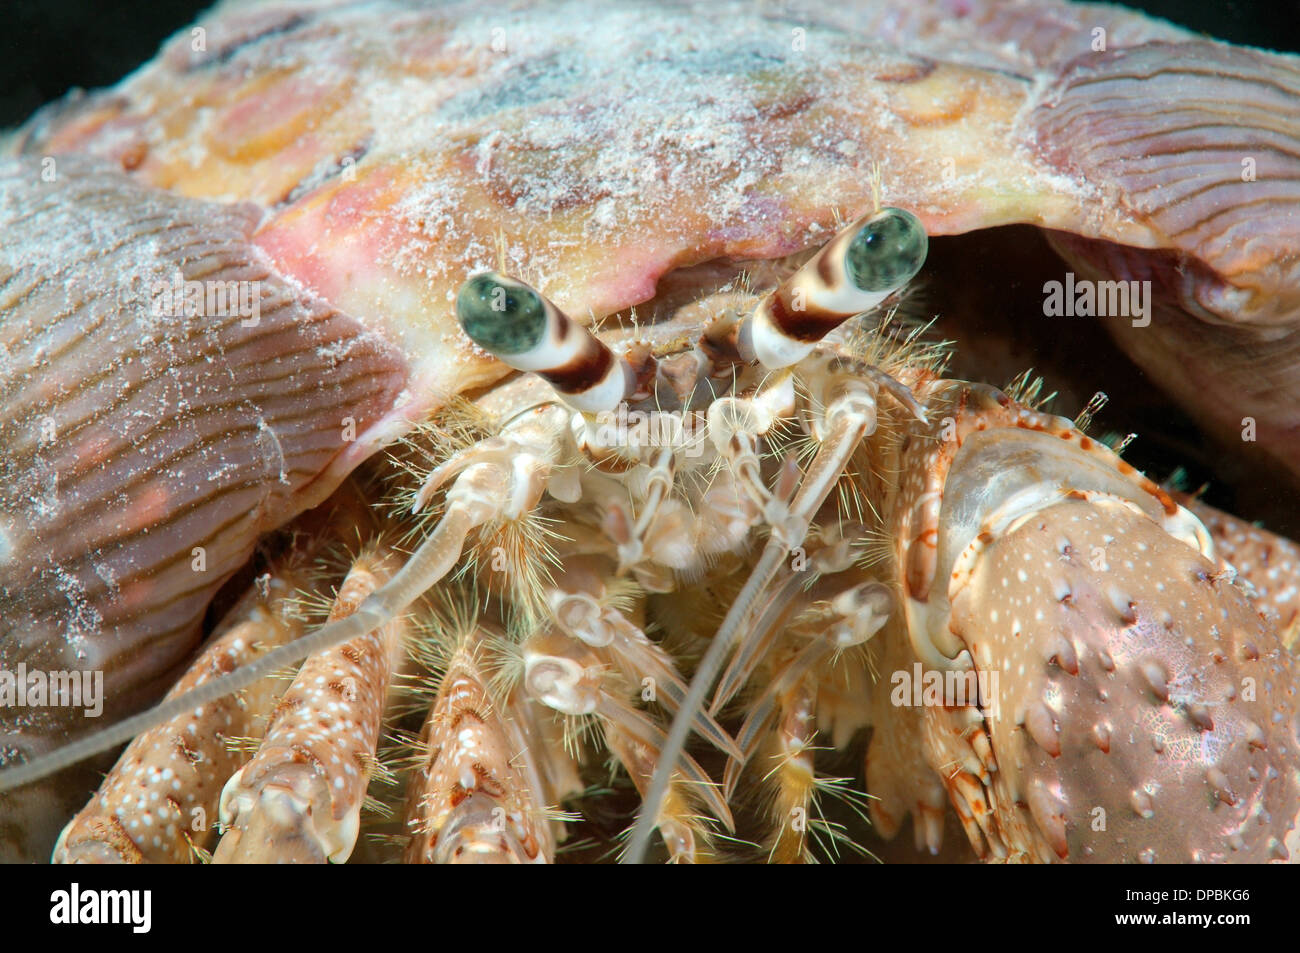 anemone hermit crab (Dardanus tinctor) Red sea, Egypt, Africa Stock Photo